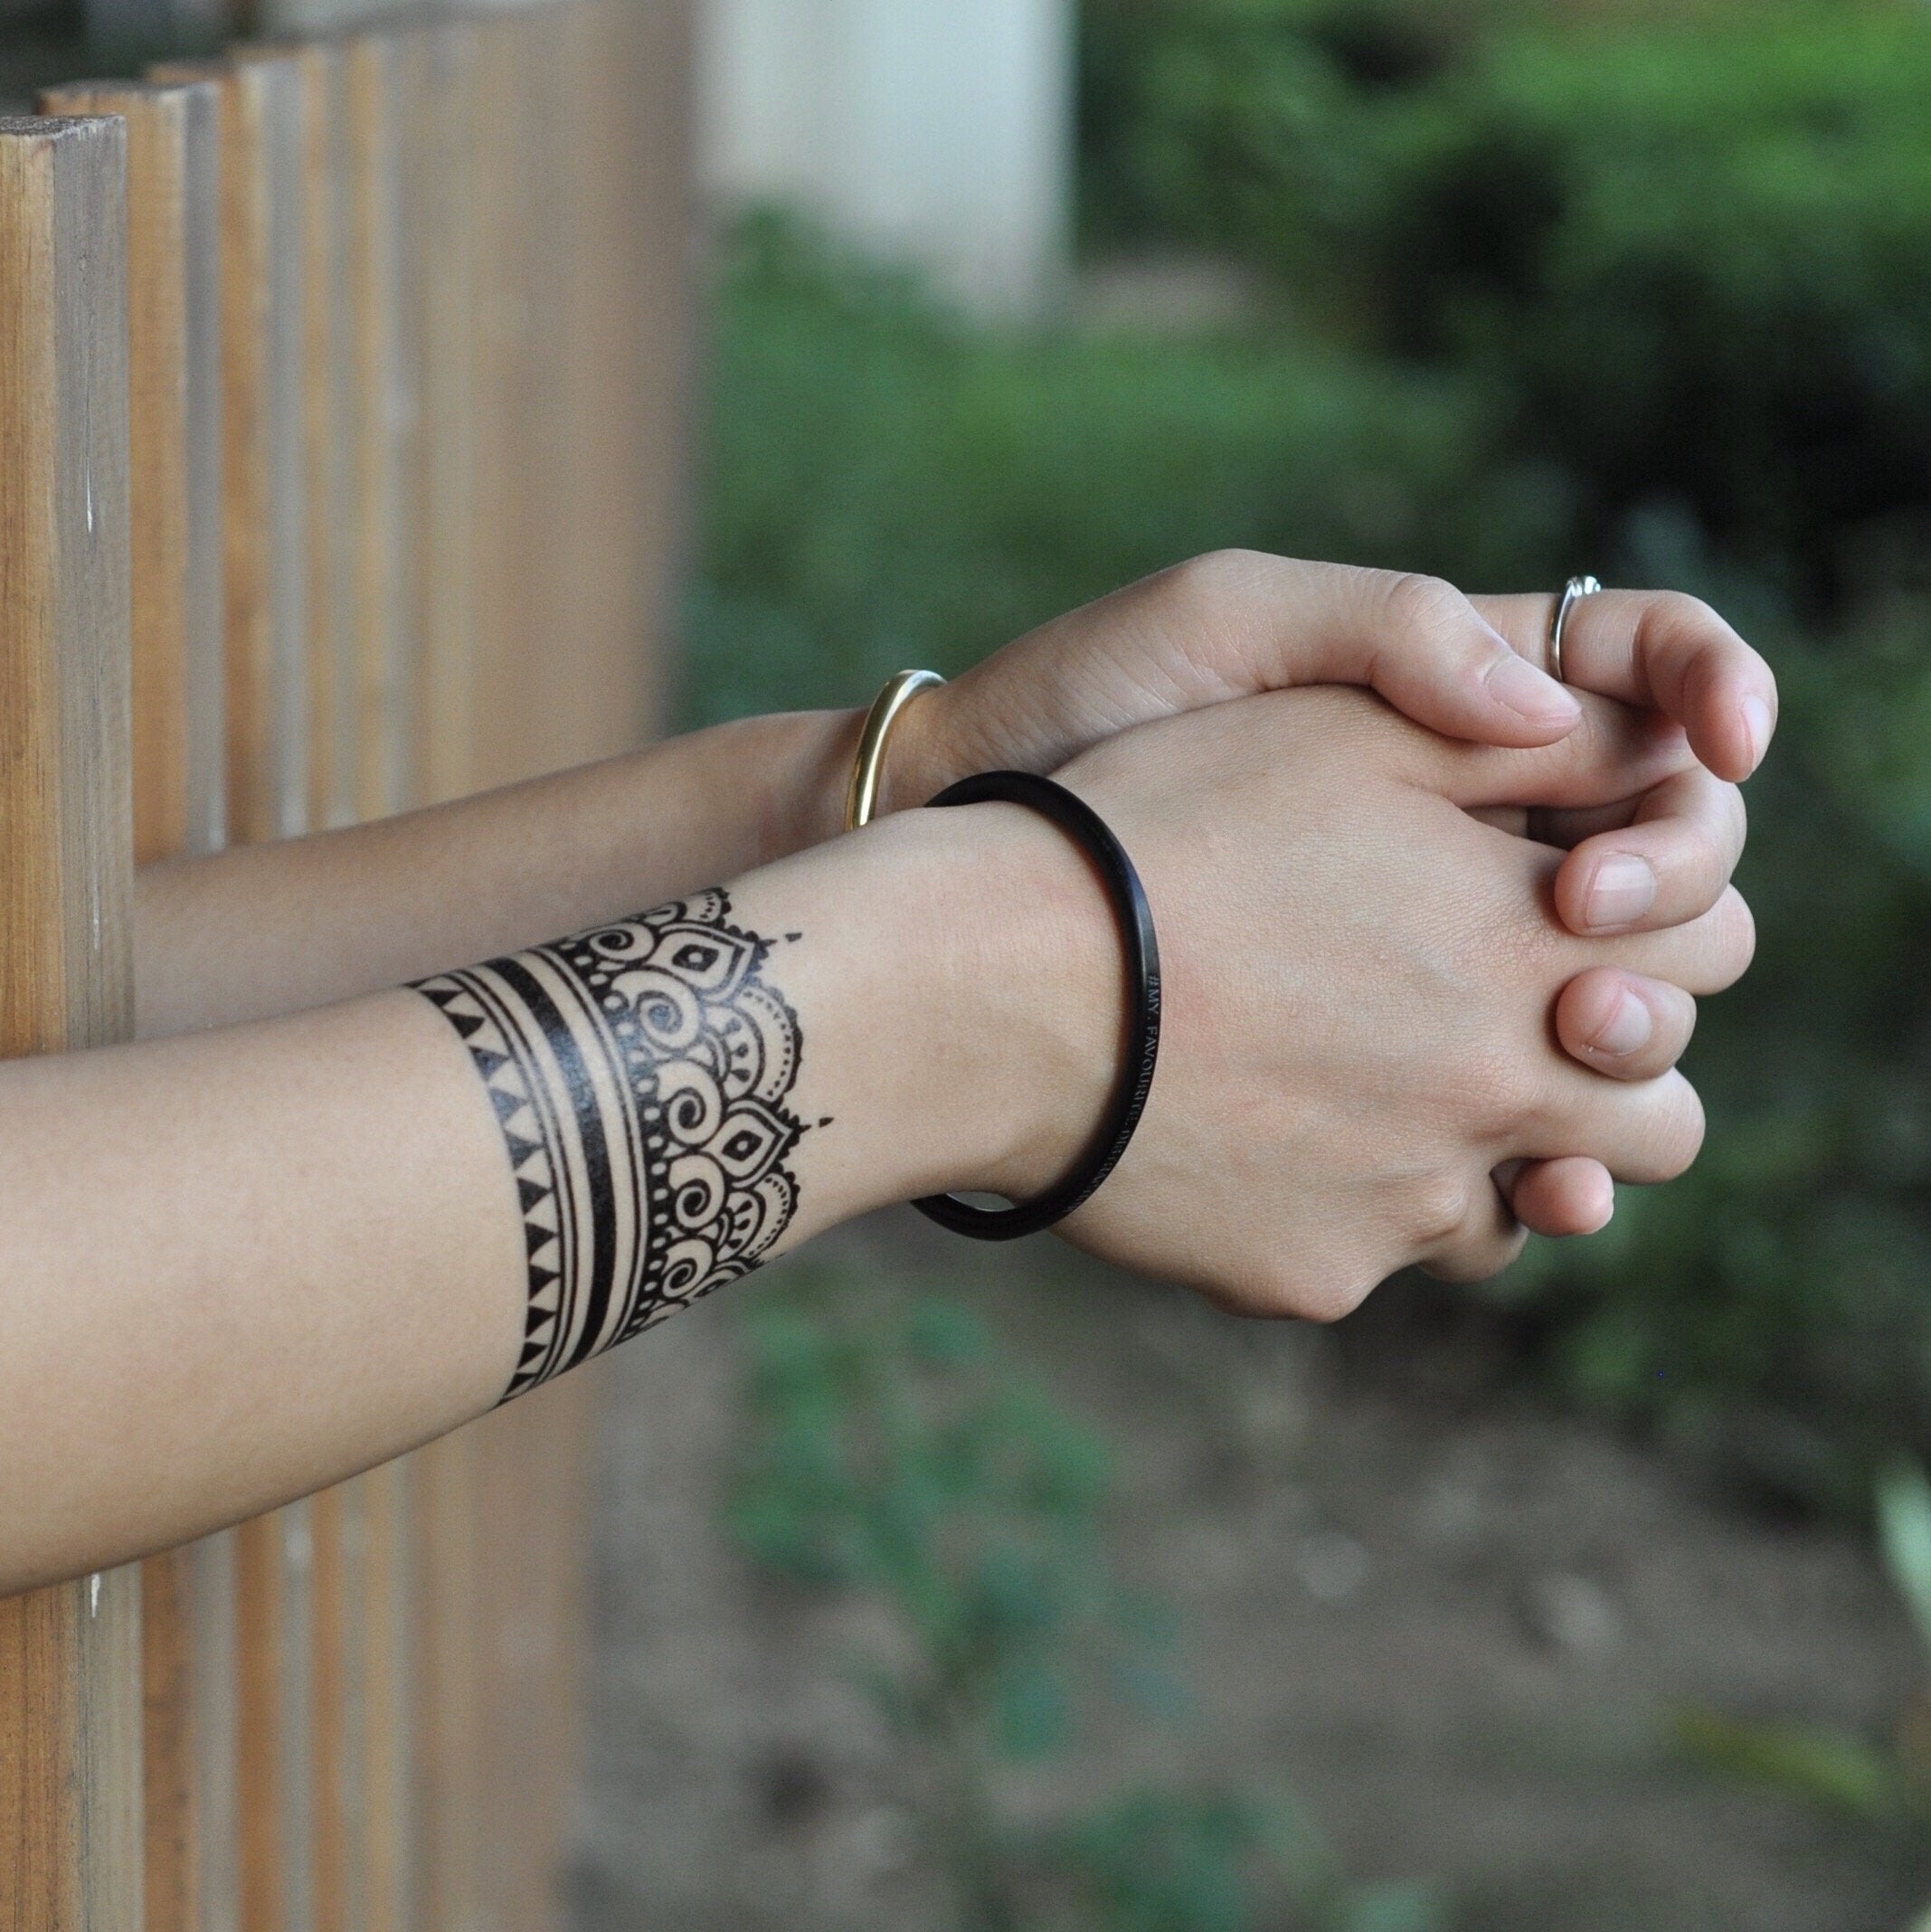 Wrist Band Tattoo | Bracelet Tattoo Design | Wrist Band Tattoo for Girls |  Small Flower Tattoo | Wrist Band Tattoo | Bracelet Tattoo Design | Wrist  Band Tattoo for Girls |